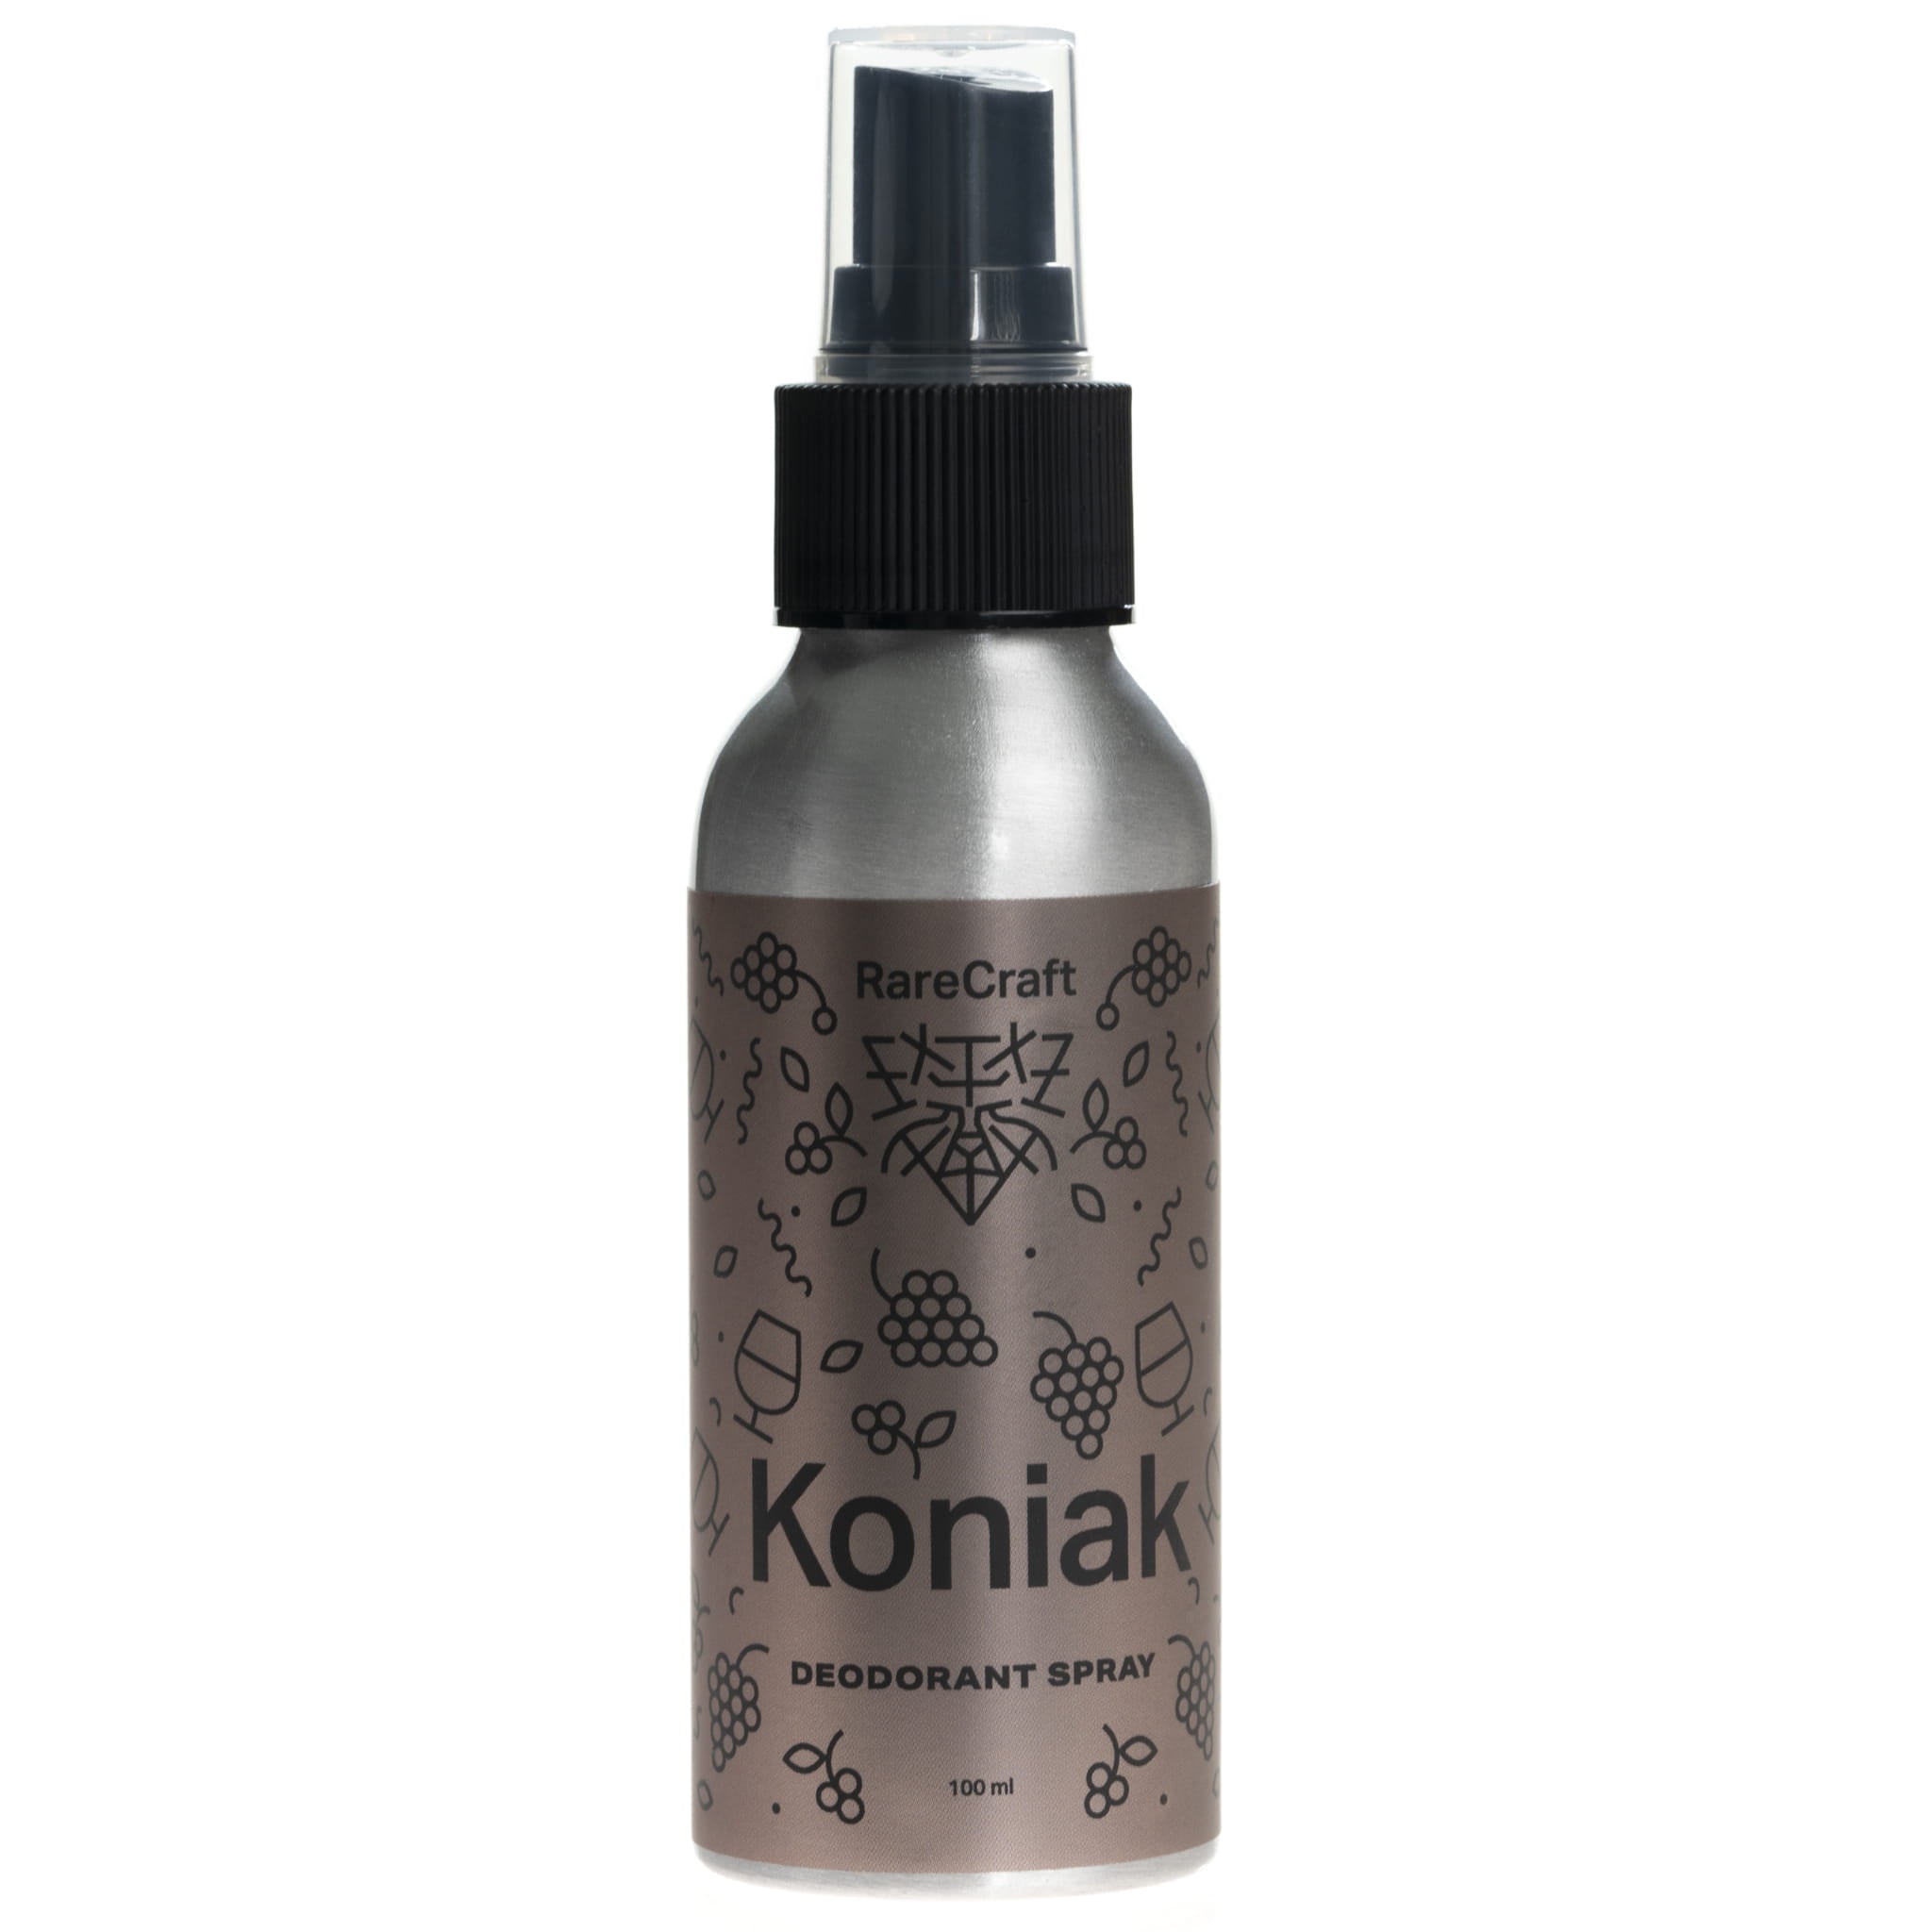 RareCraft Koniak, Deodorant Spray